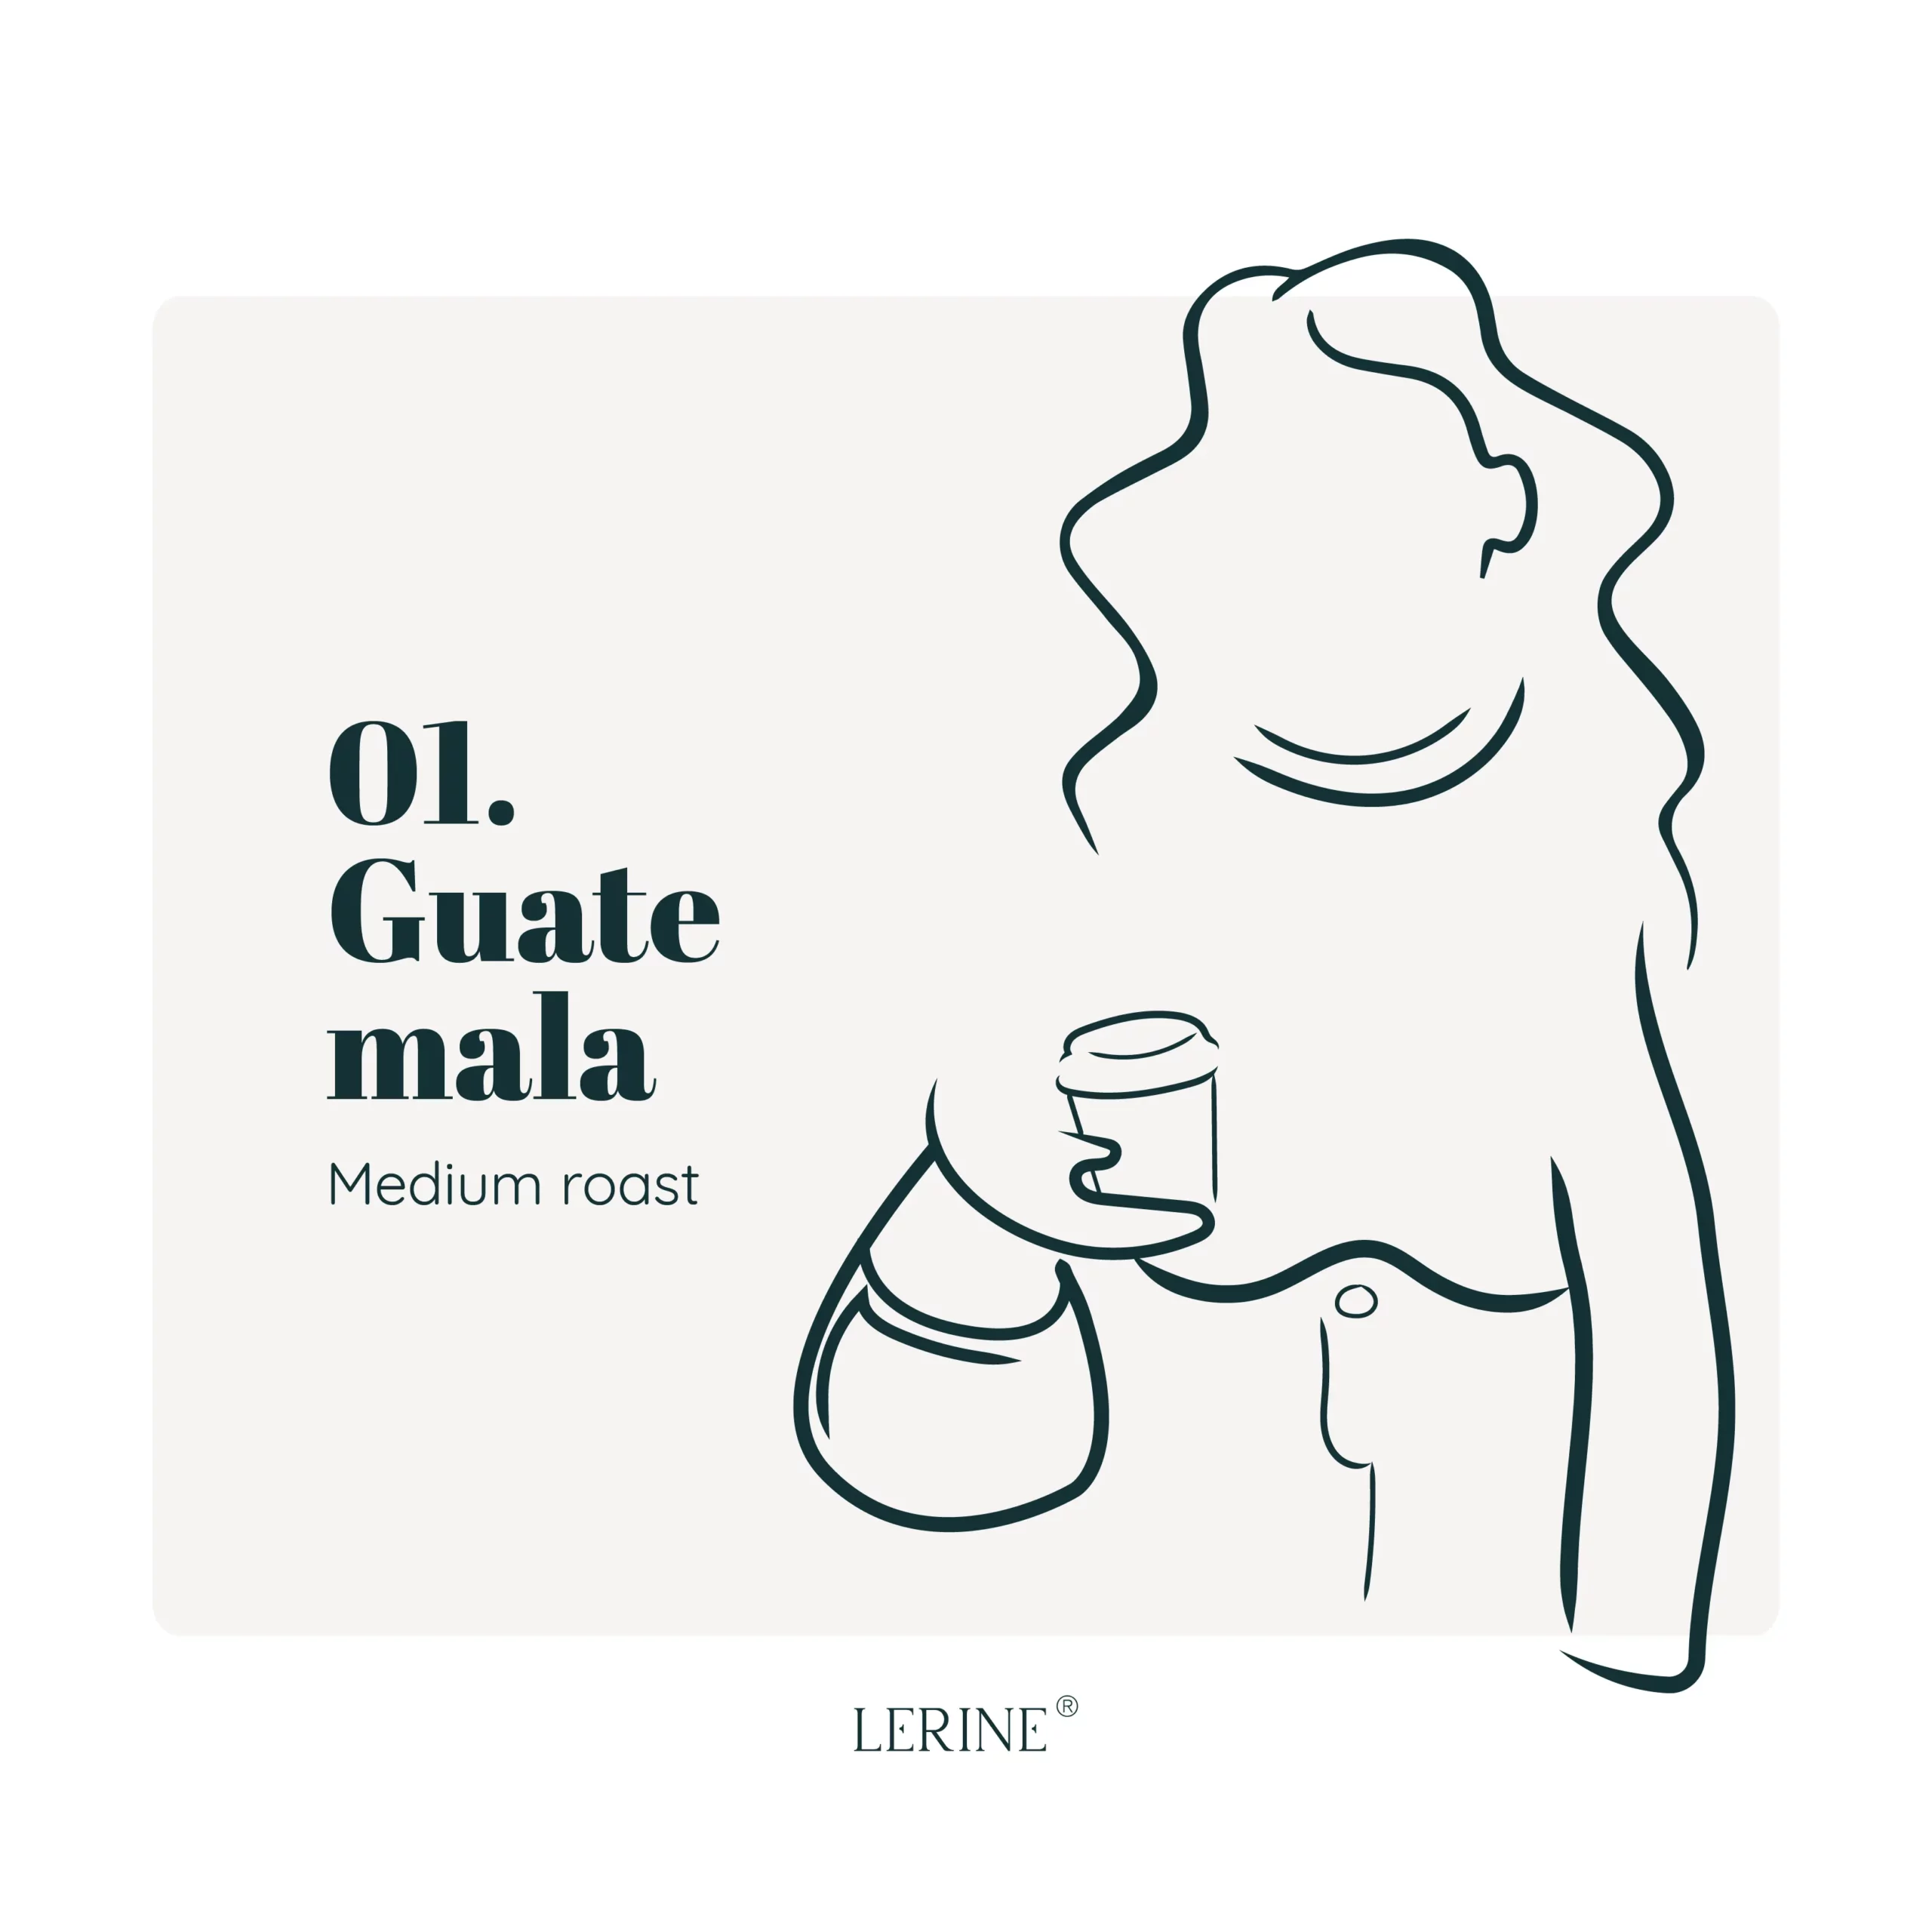 LeRine koffiebonen – 01. Guatemala